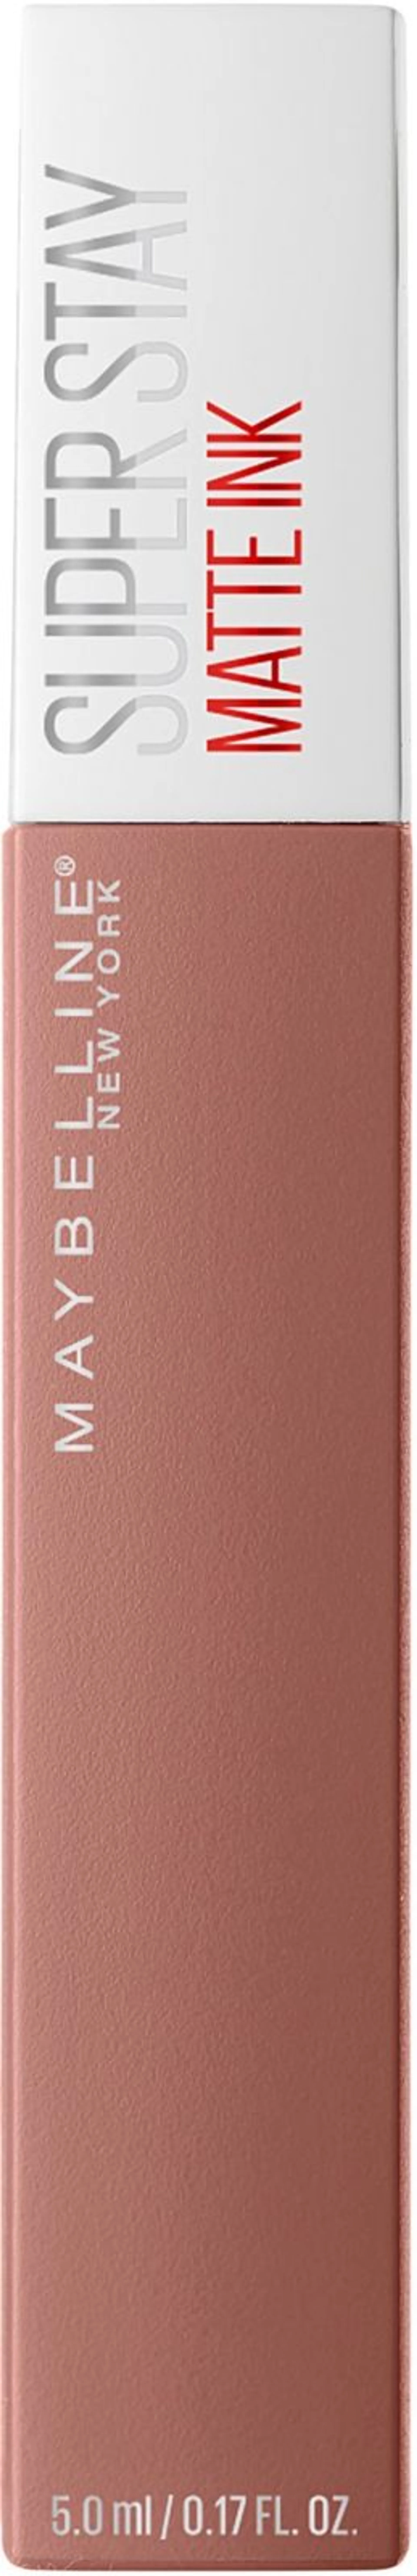 Maybelline New York Super Stay Matte Ink 65 Seductress -huulipuna 5ml - 2